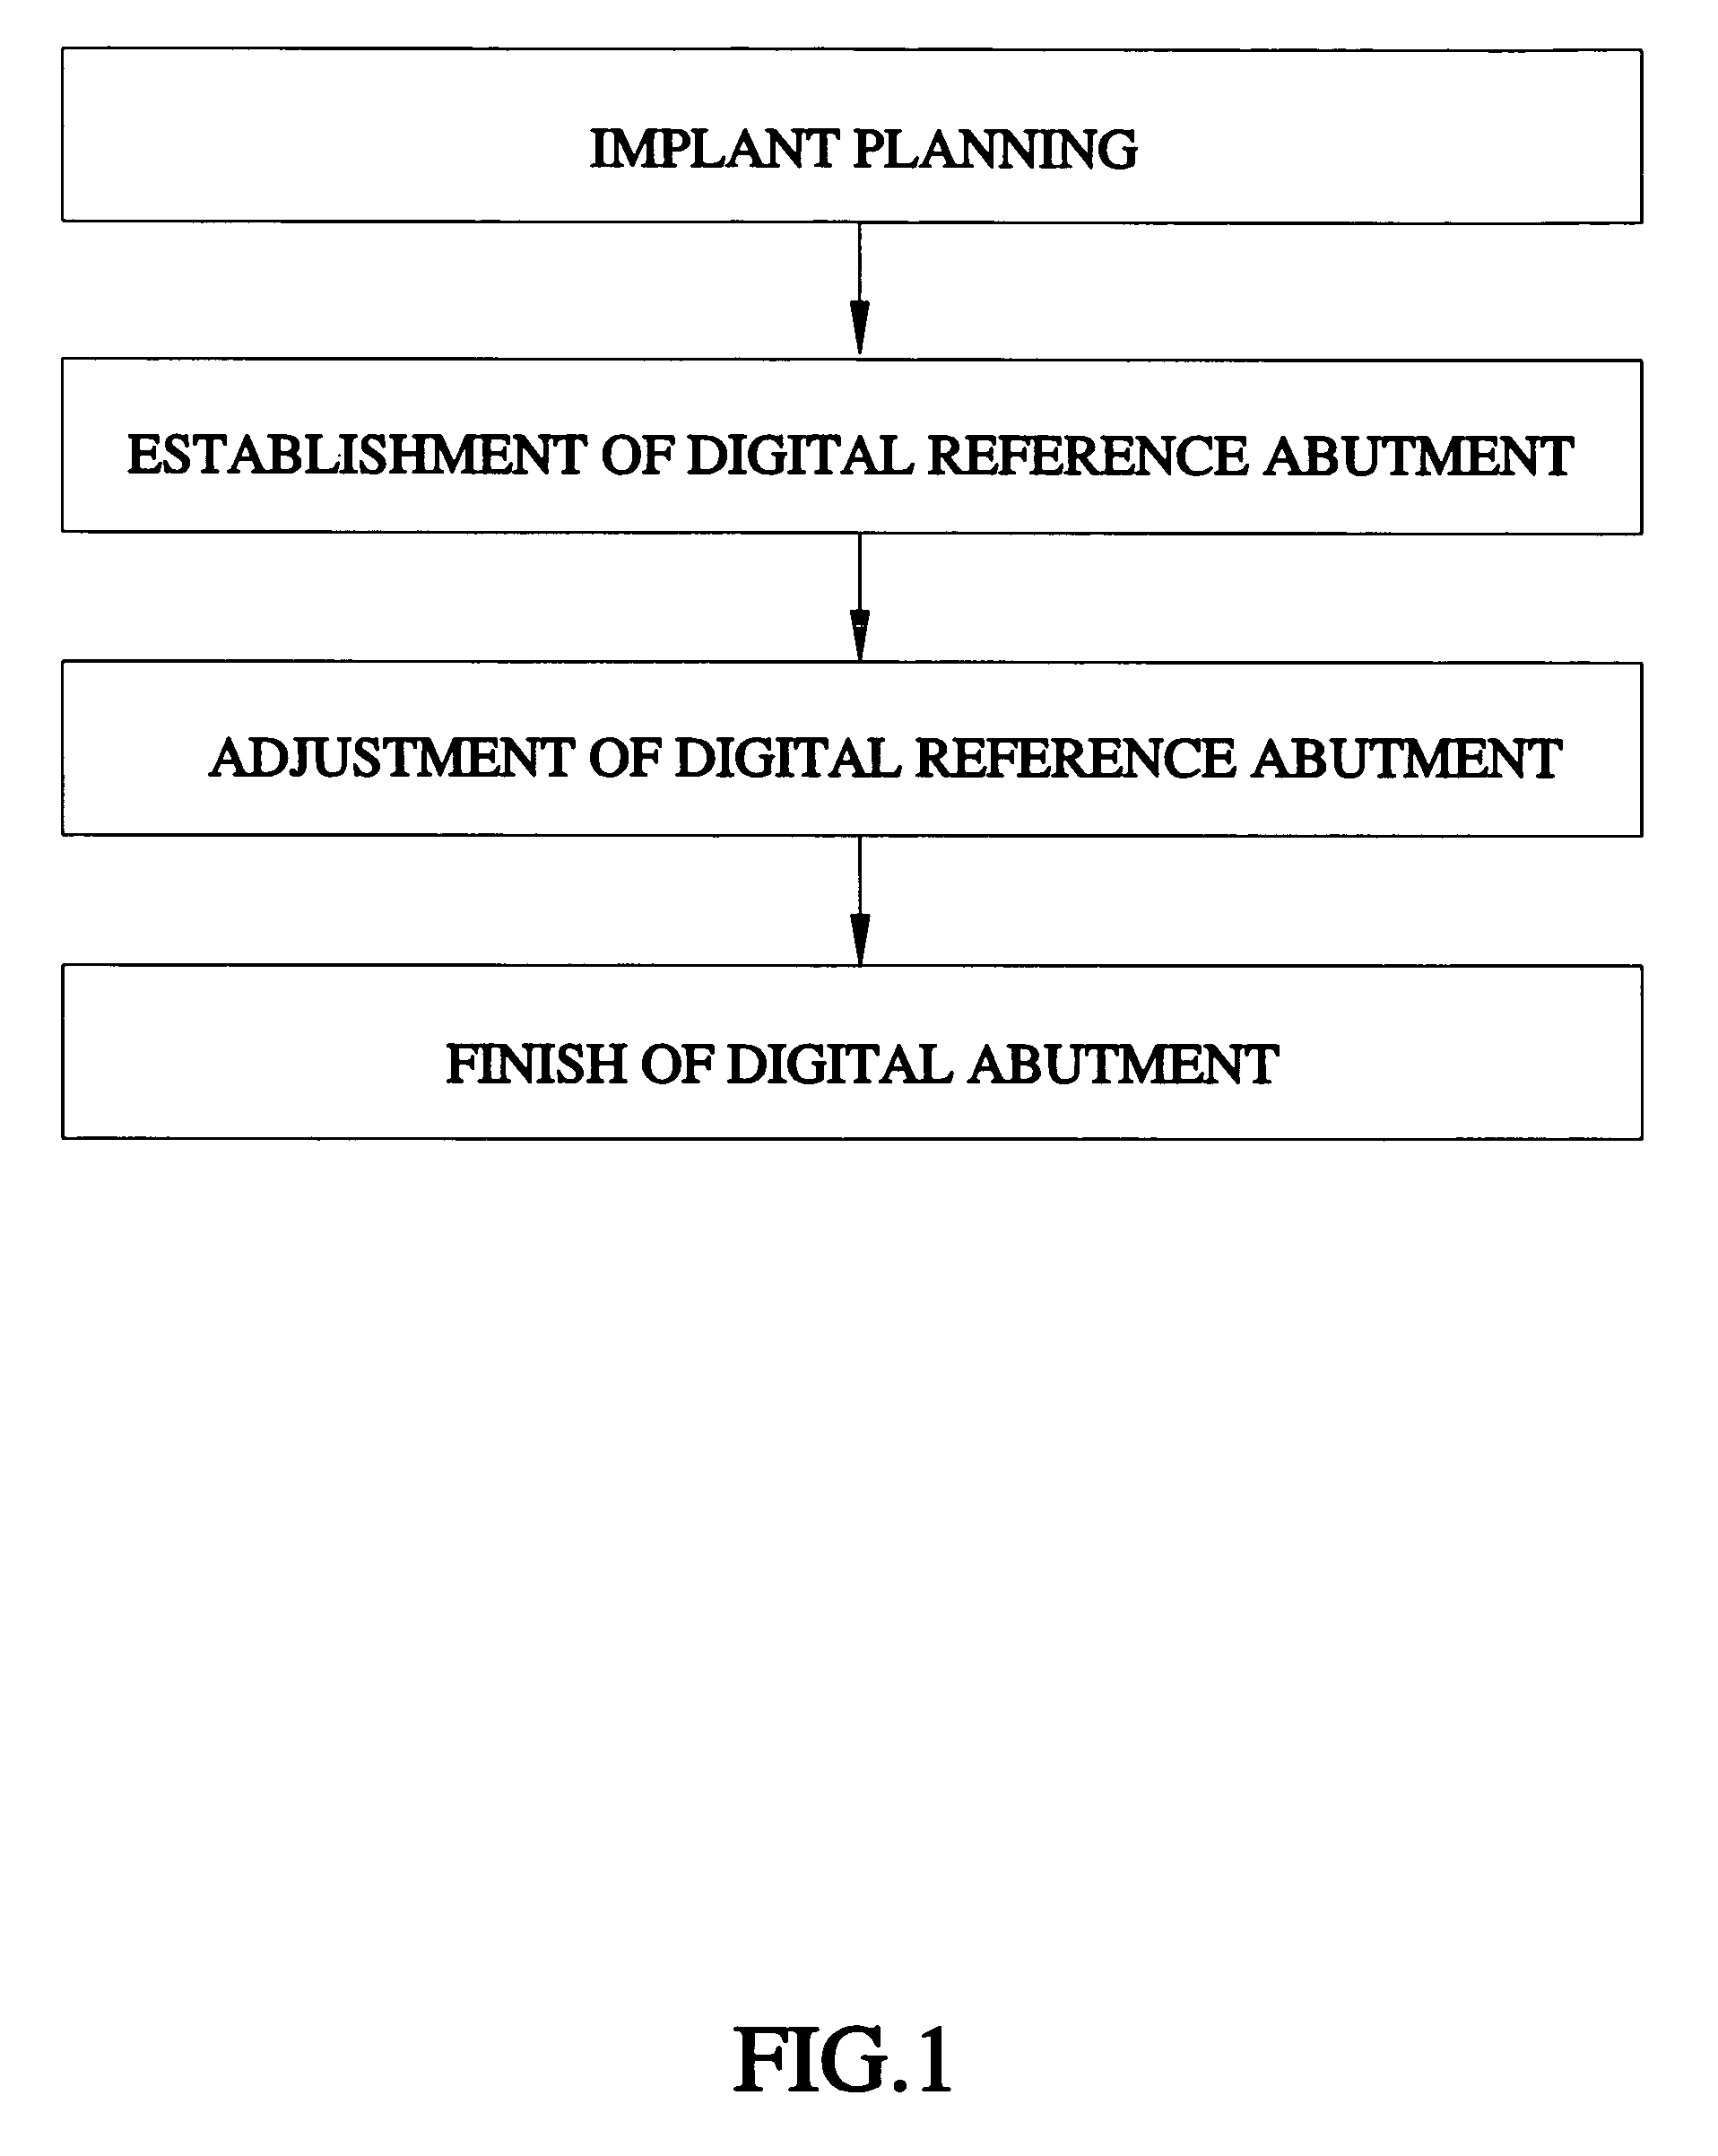 Method for designing a digital abutment for dental implant